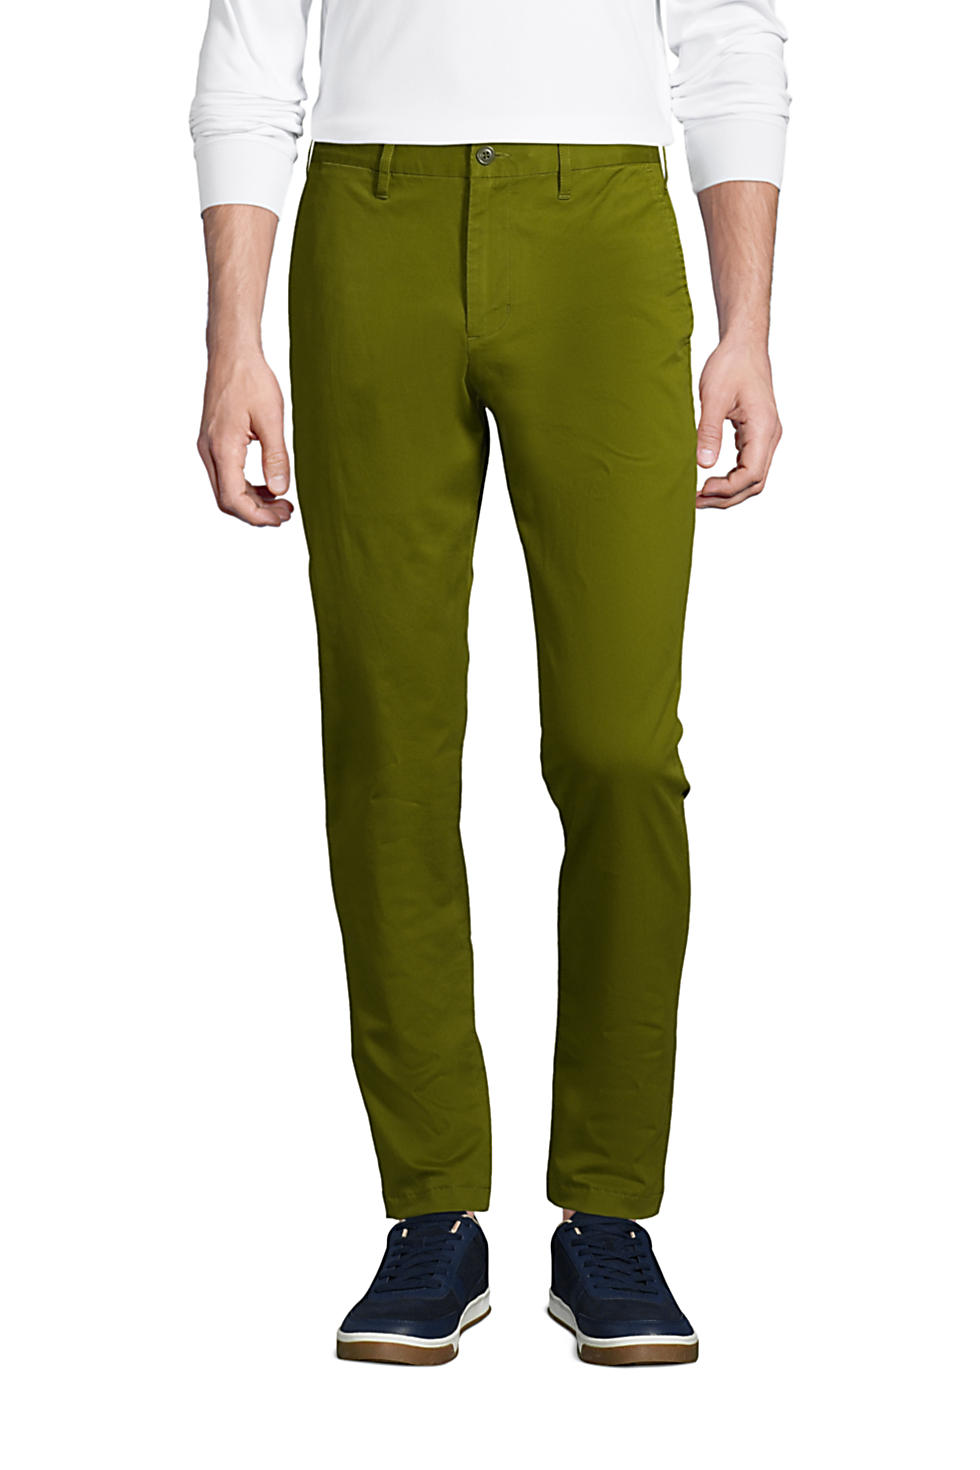 Lands' End Men's Athletic Fit Chino Pants (2 color options)